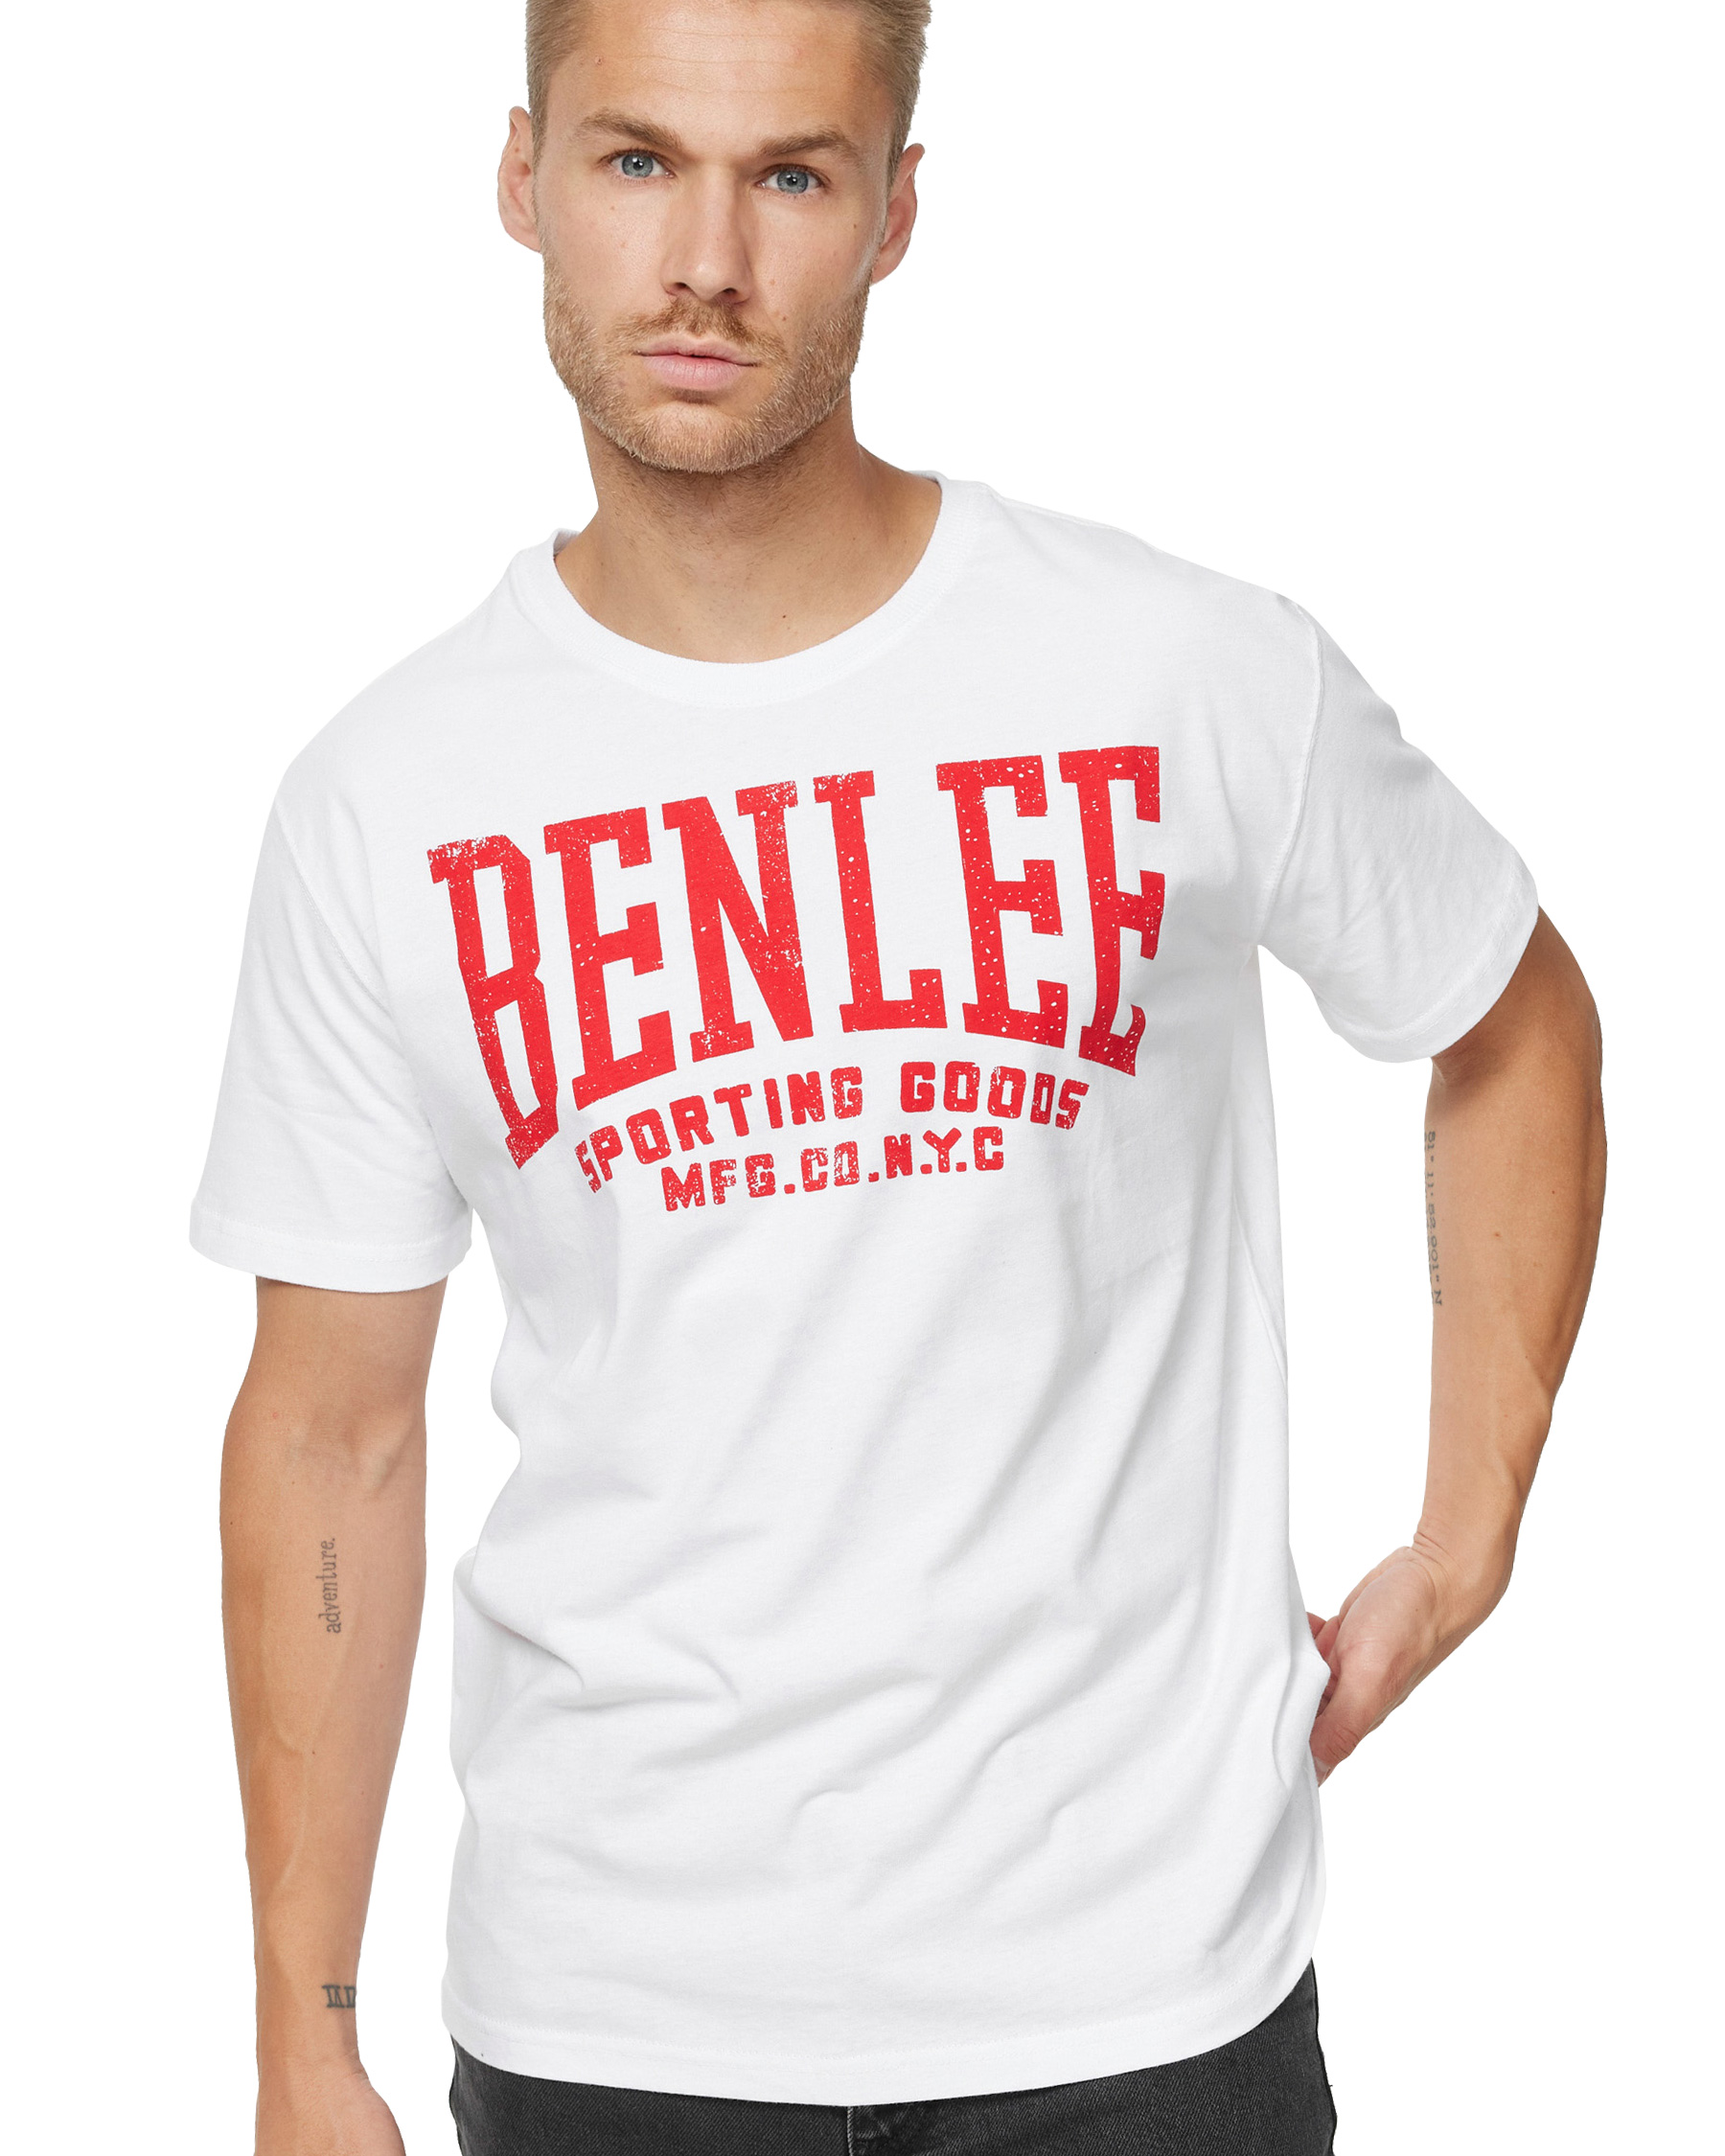 BenLee T-Shirt Turney